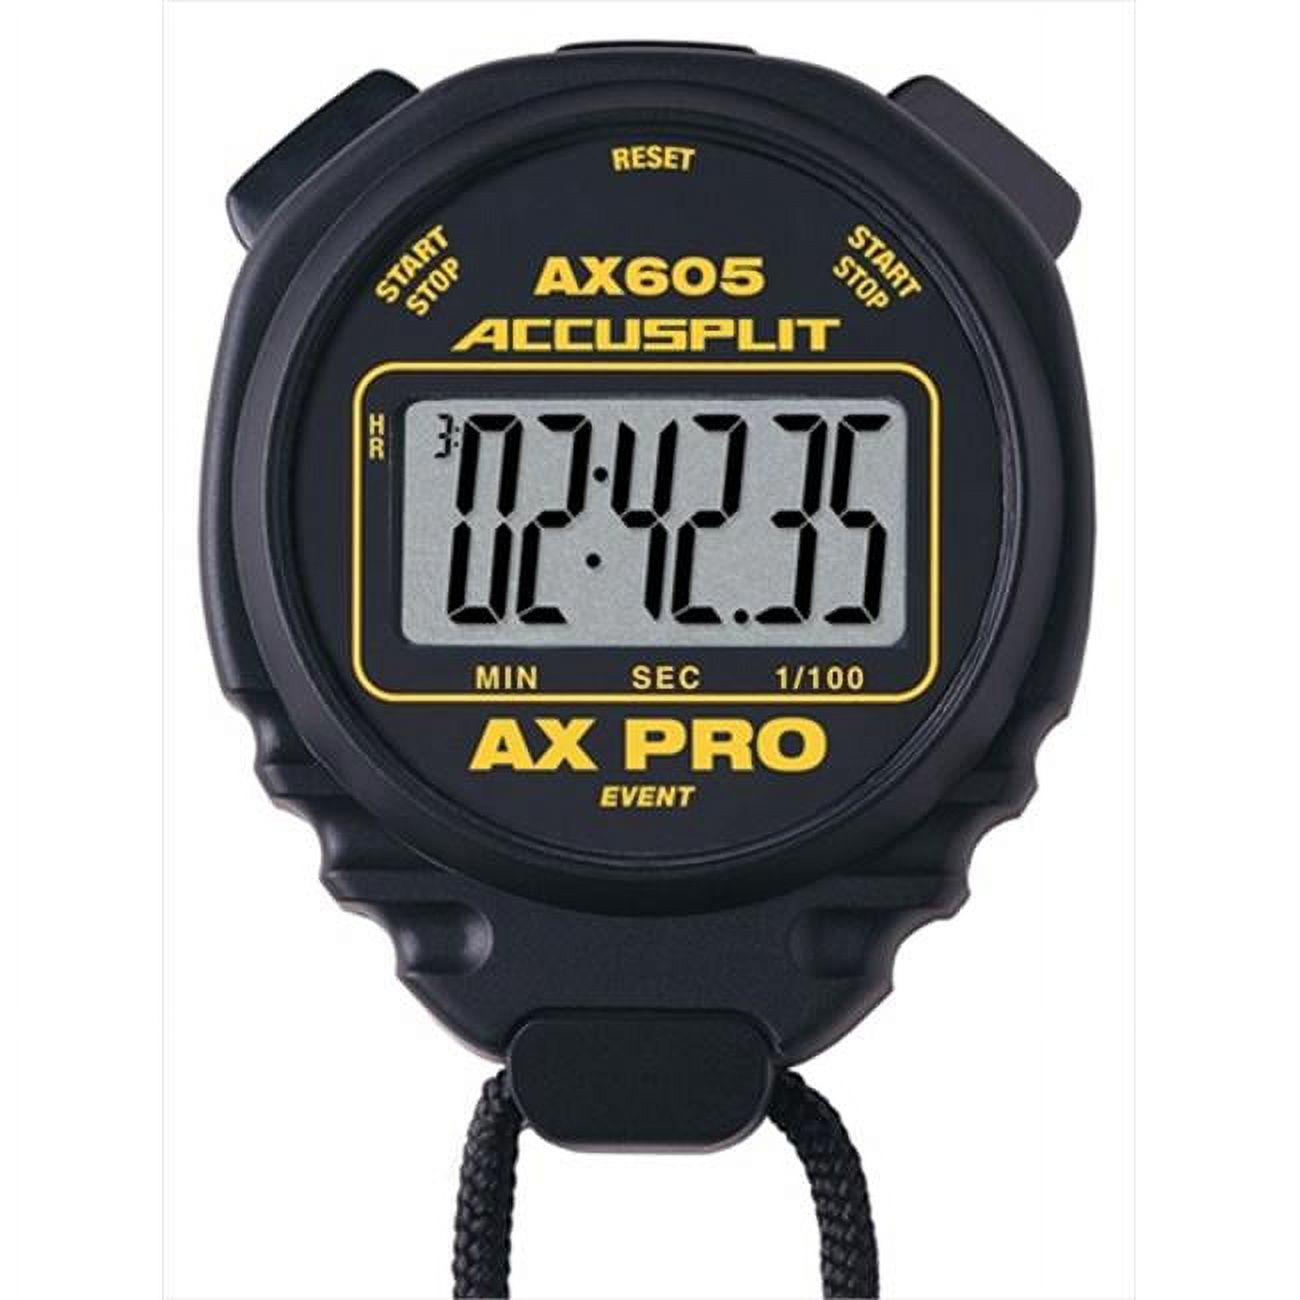 Accusplit AX605 AX Pro Event Stopwatch - image 1 of 2